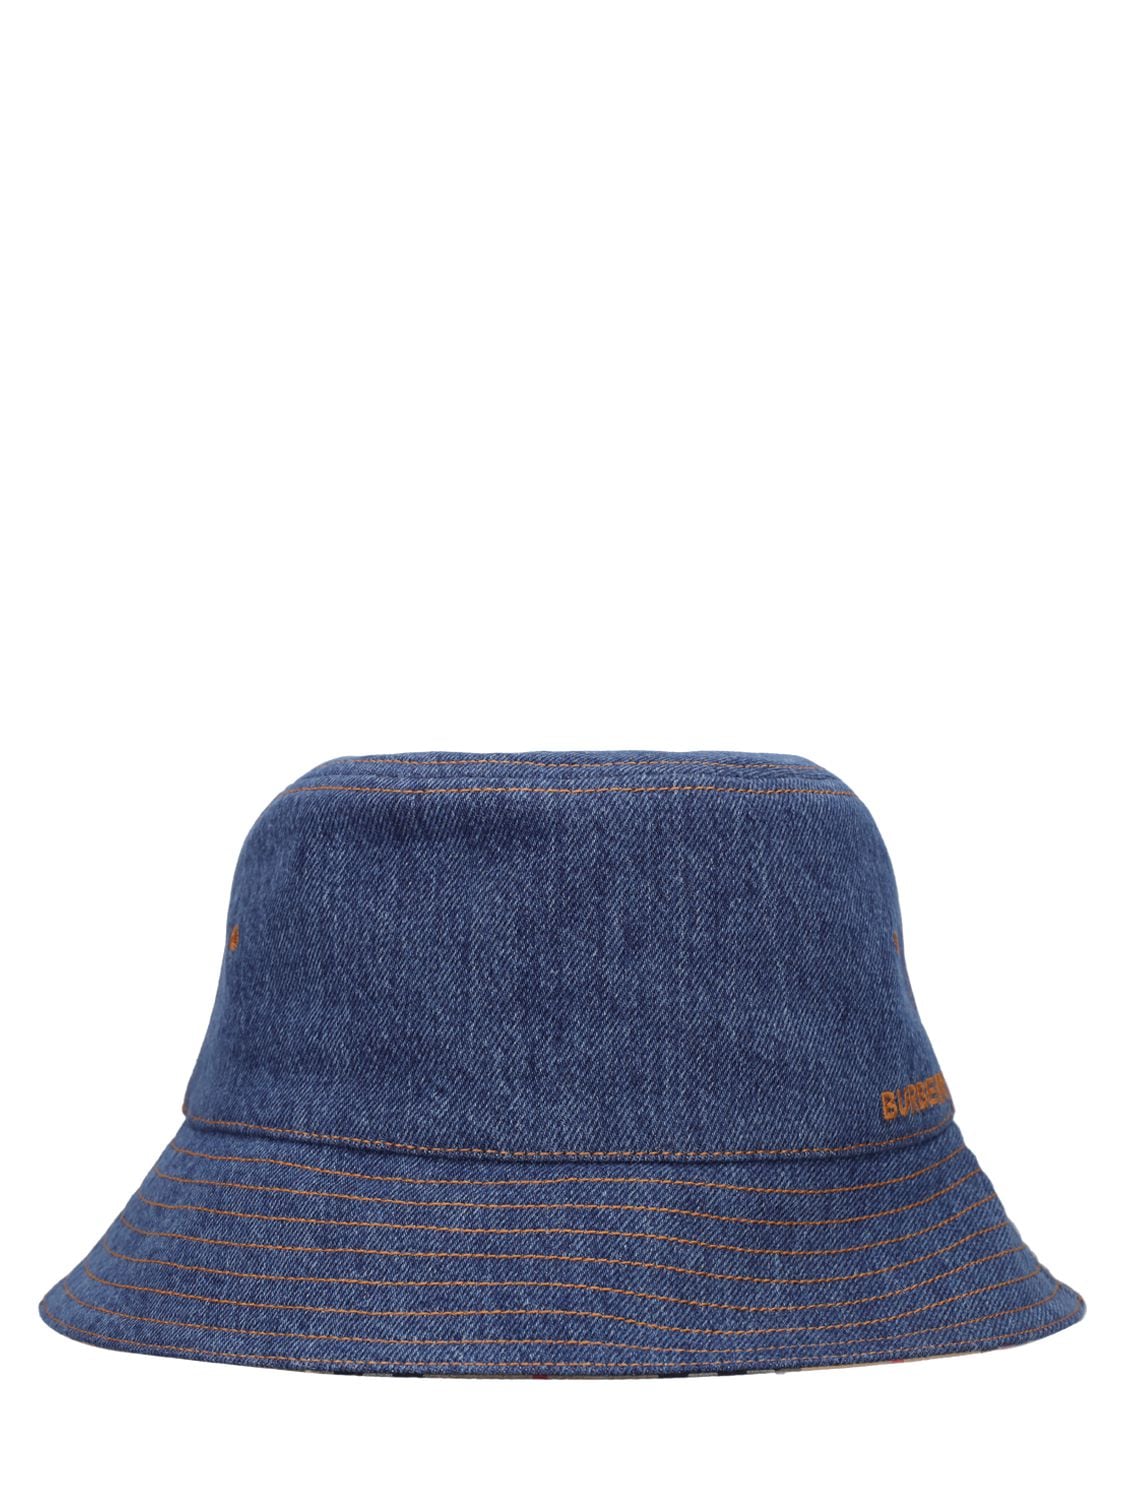 Image of Washed Cotton Denim Bucket Hat